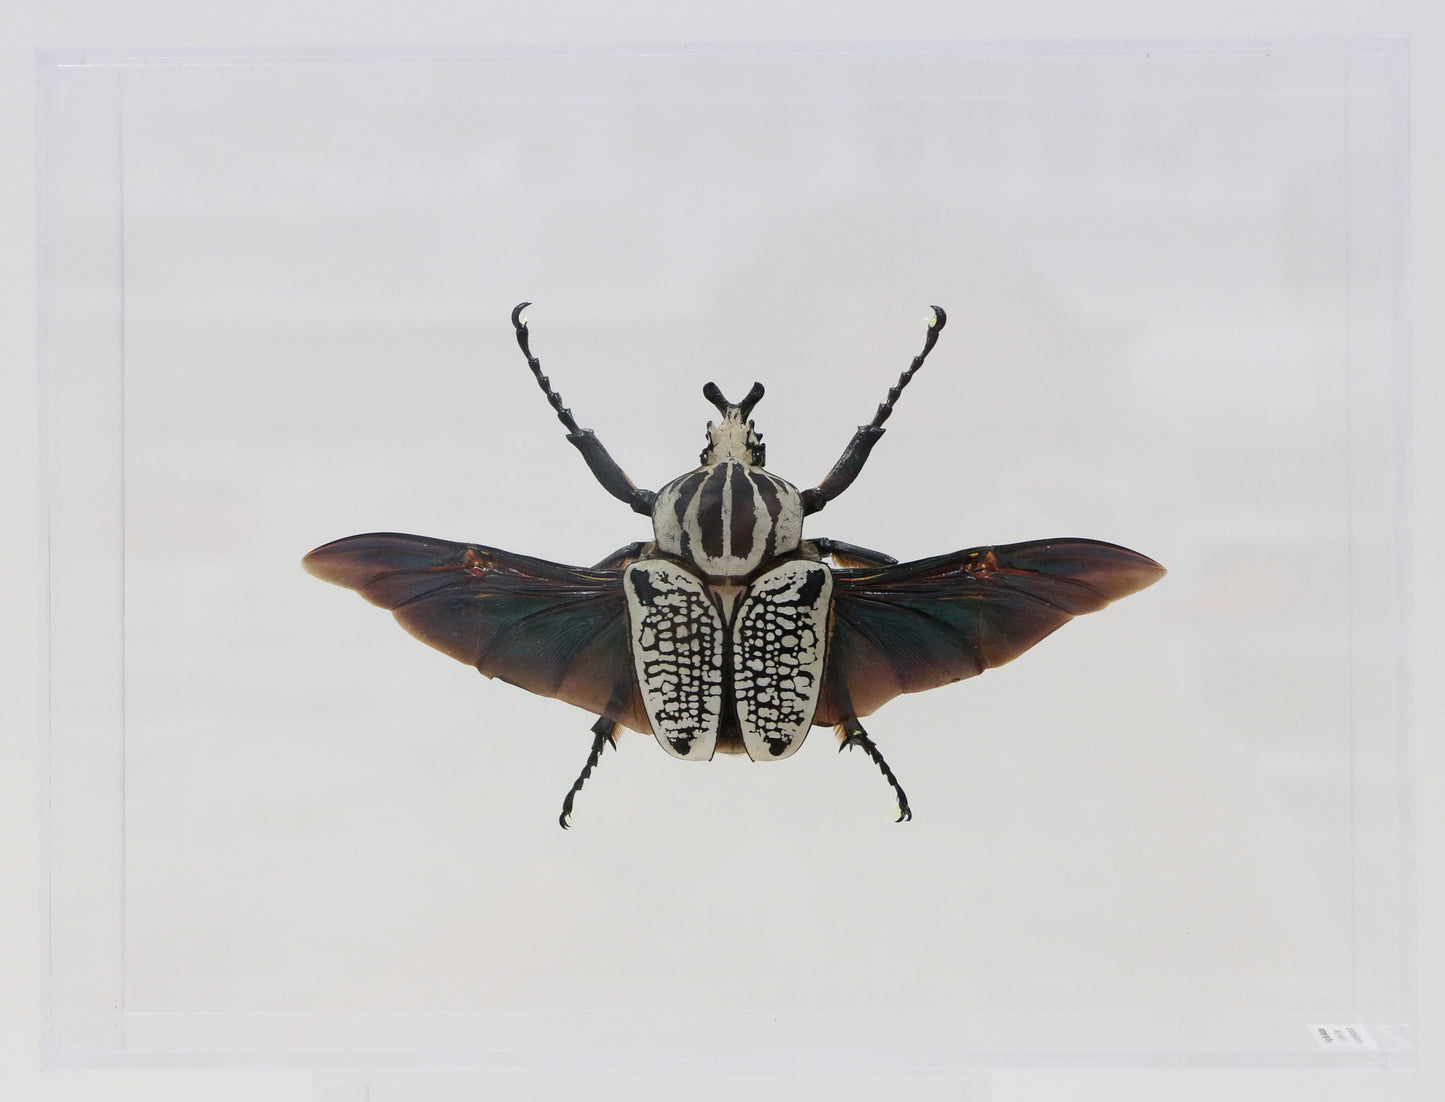 9091250 - Real Bug Acrylic Display Box - 9" X 12" - Goliath Beetle - Spread